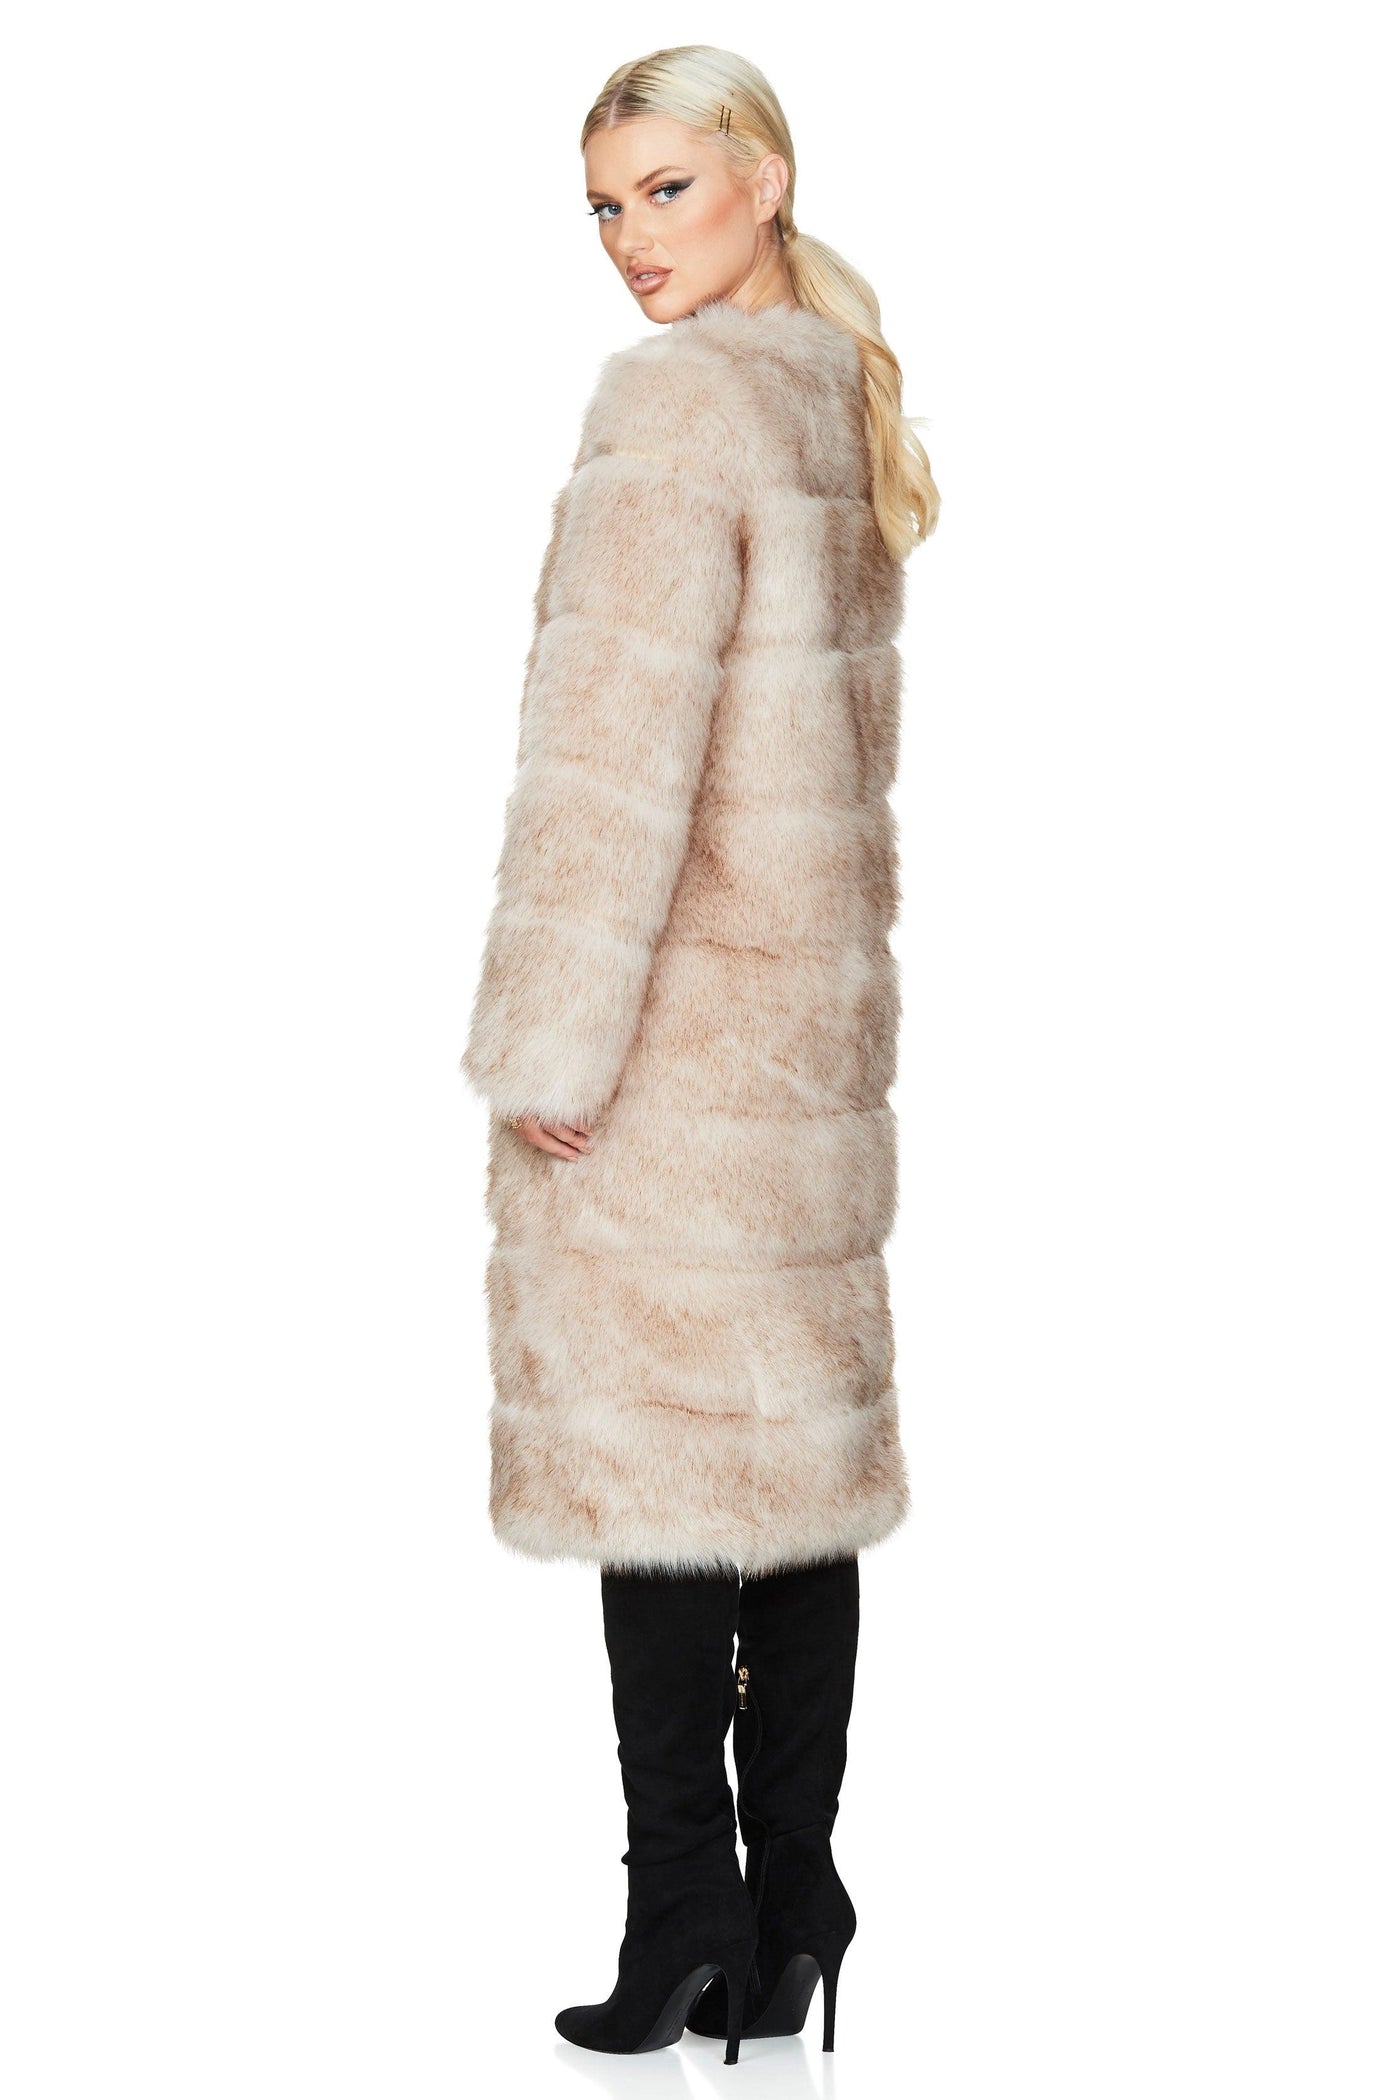 Nookie Tatiana Faux Fur Long Jacket - Cream - JAUS